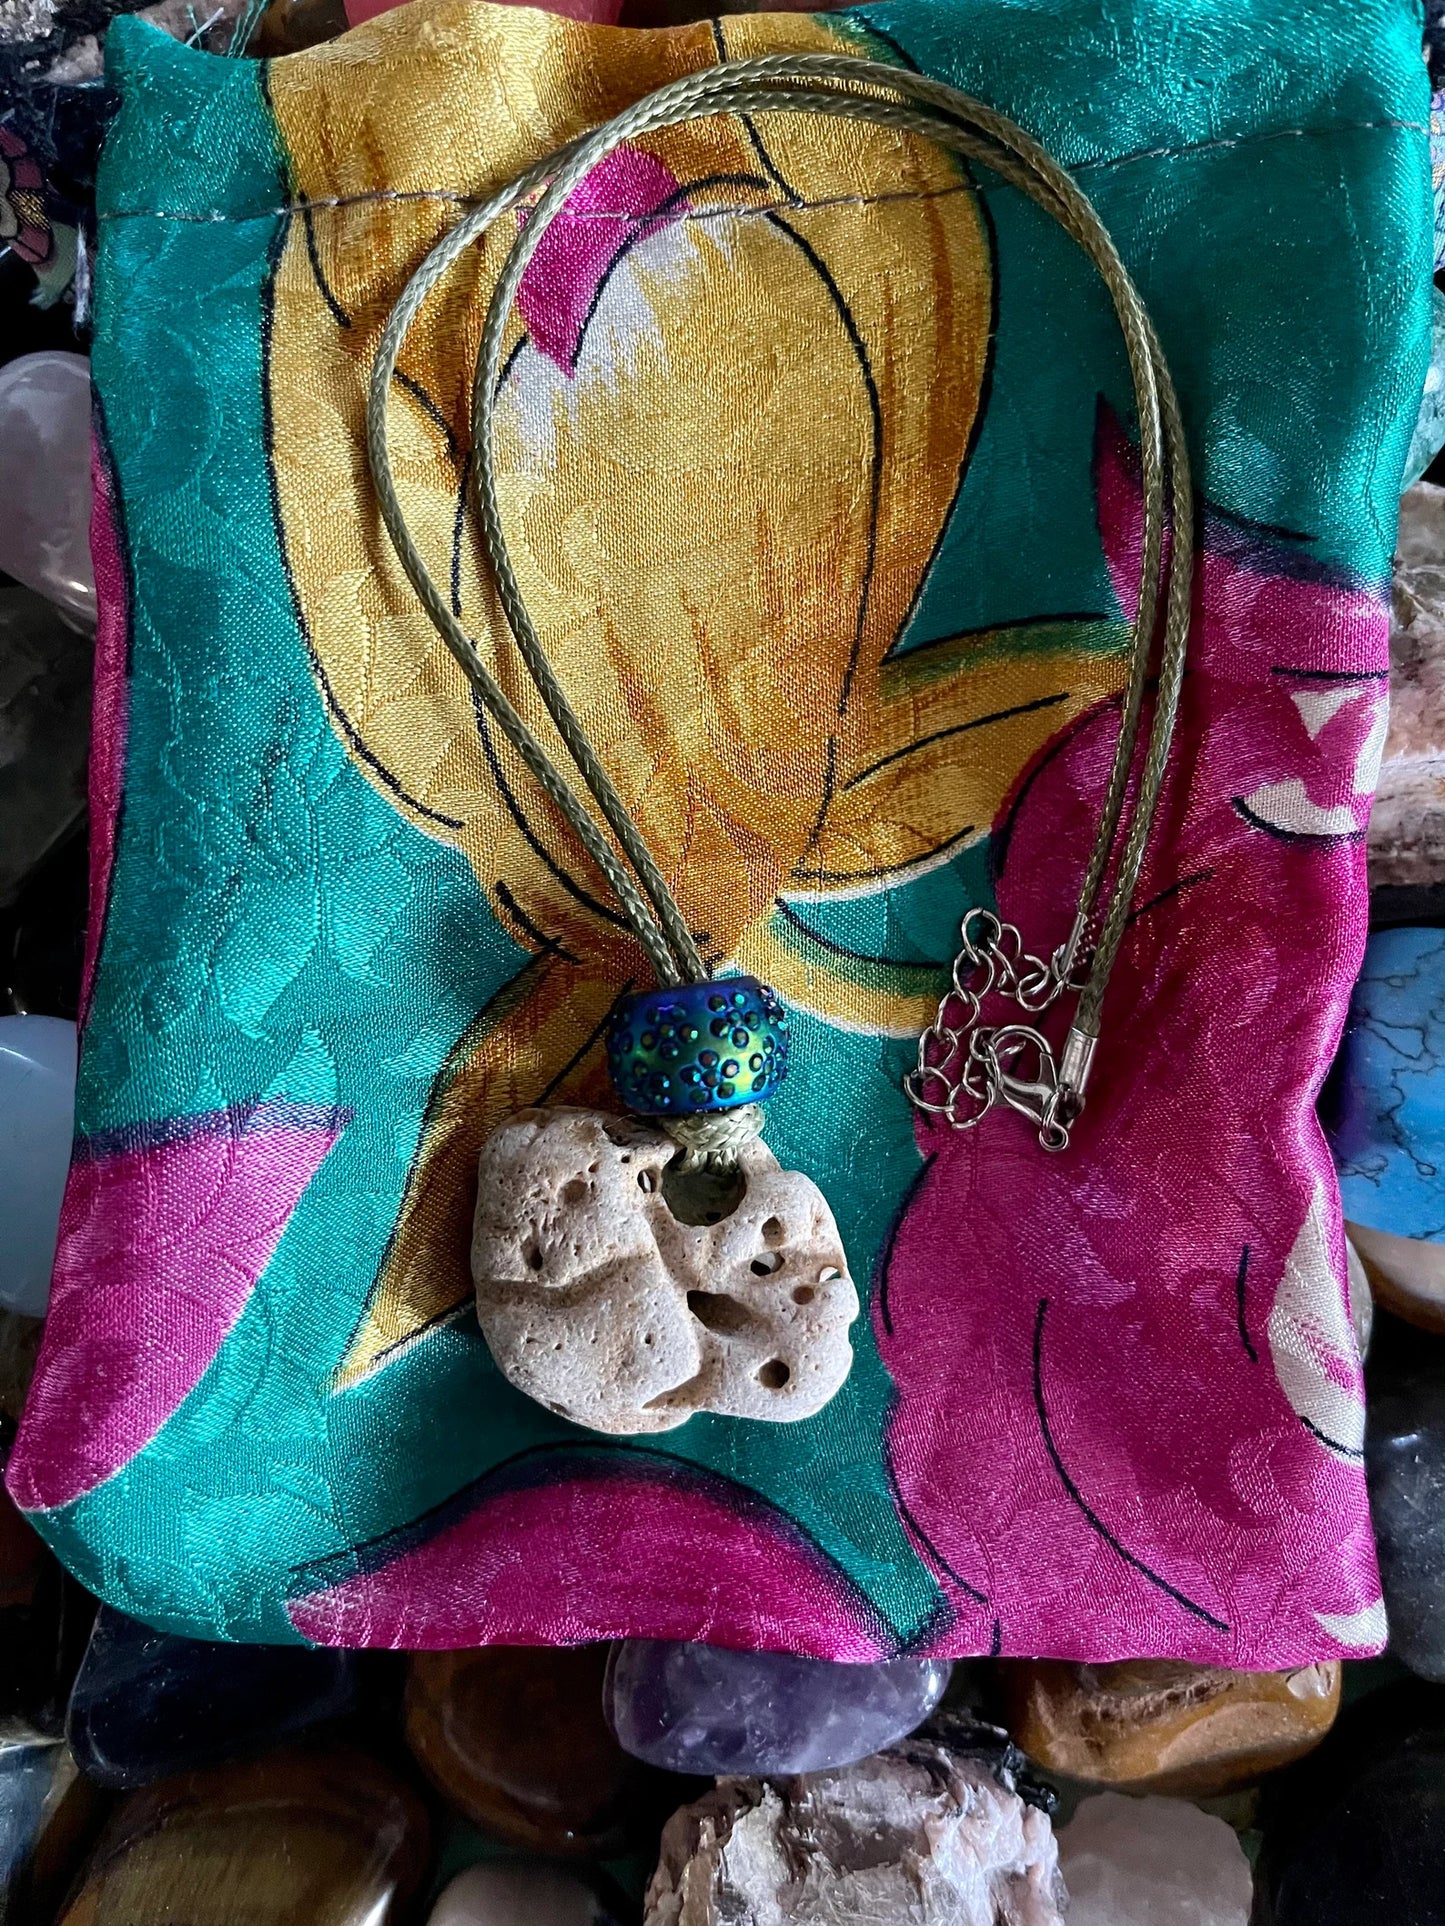 Spirited Bohemian Water Magic Amulet, Hag Stone Necklace, Bodhi Jewelry